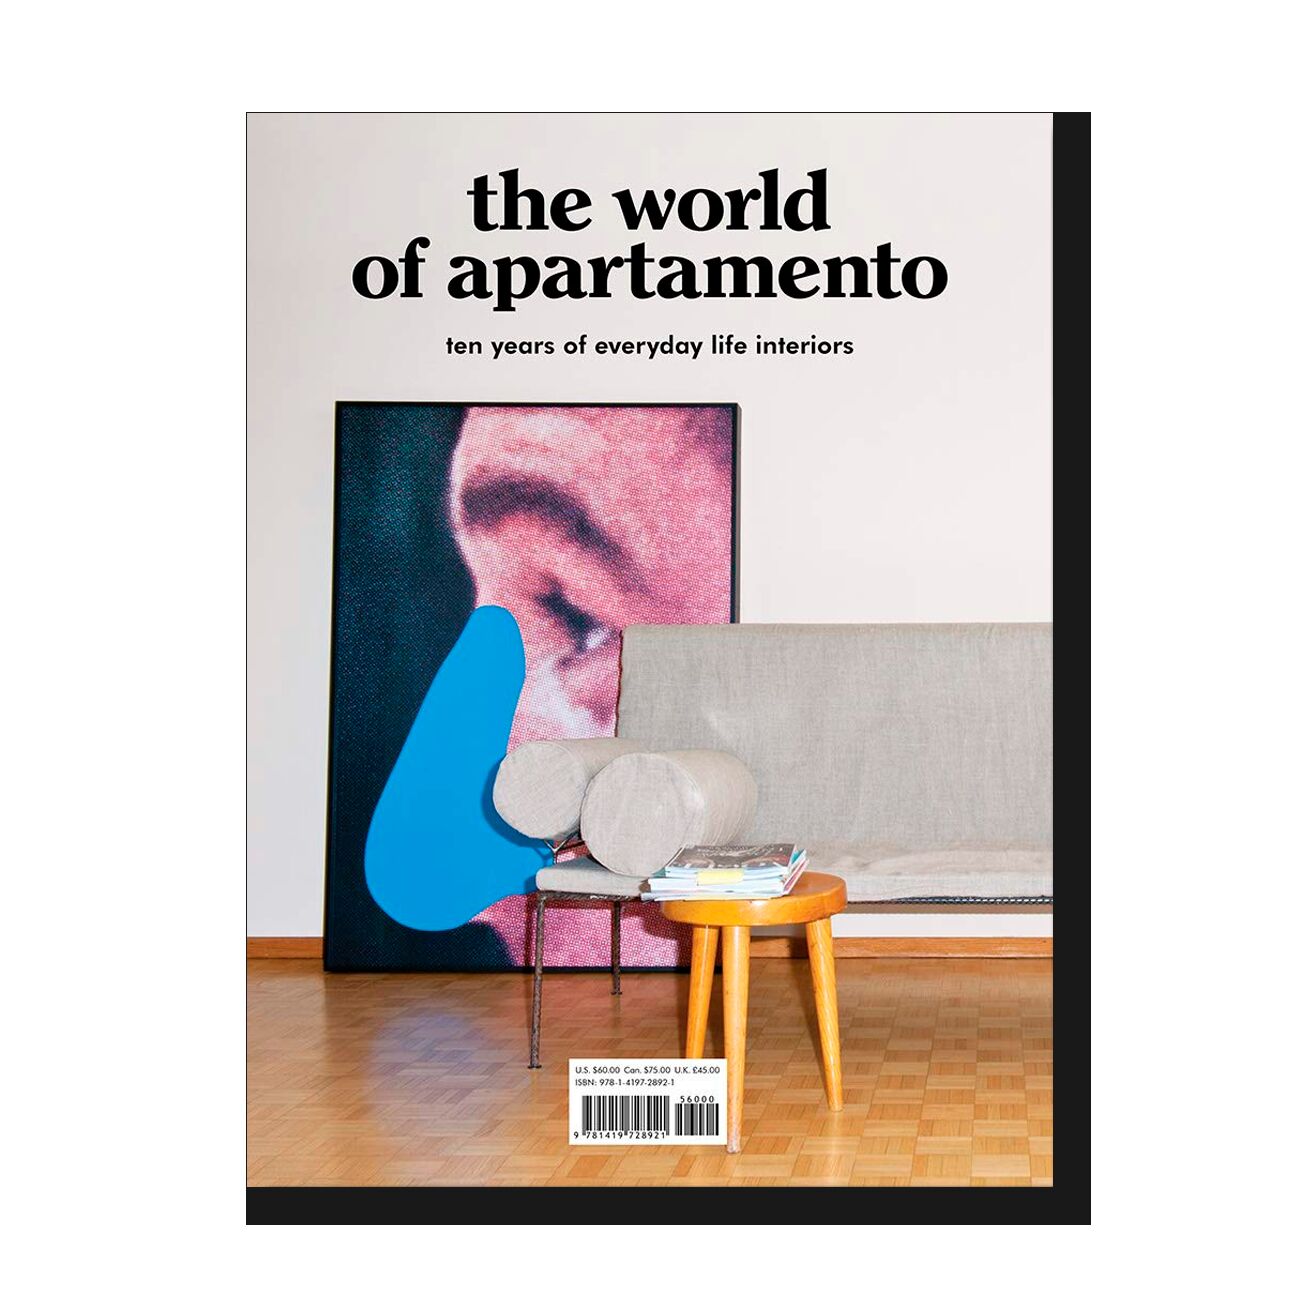 The World of Apartamento: ten years of everyday life interiors